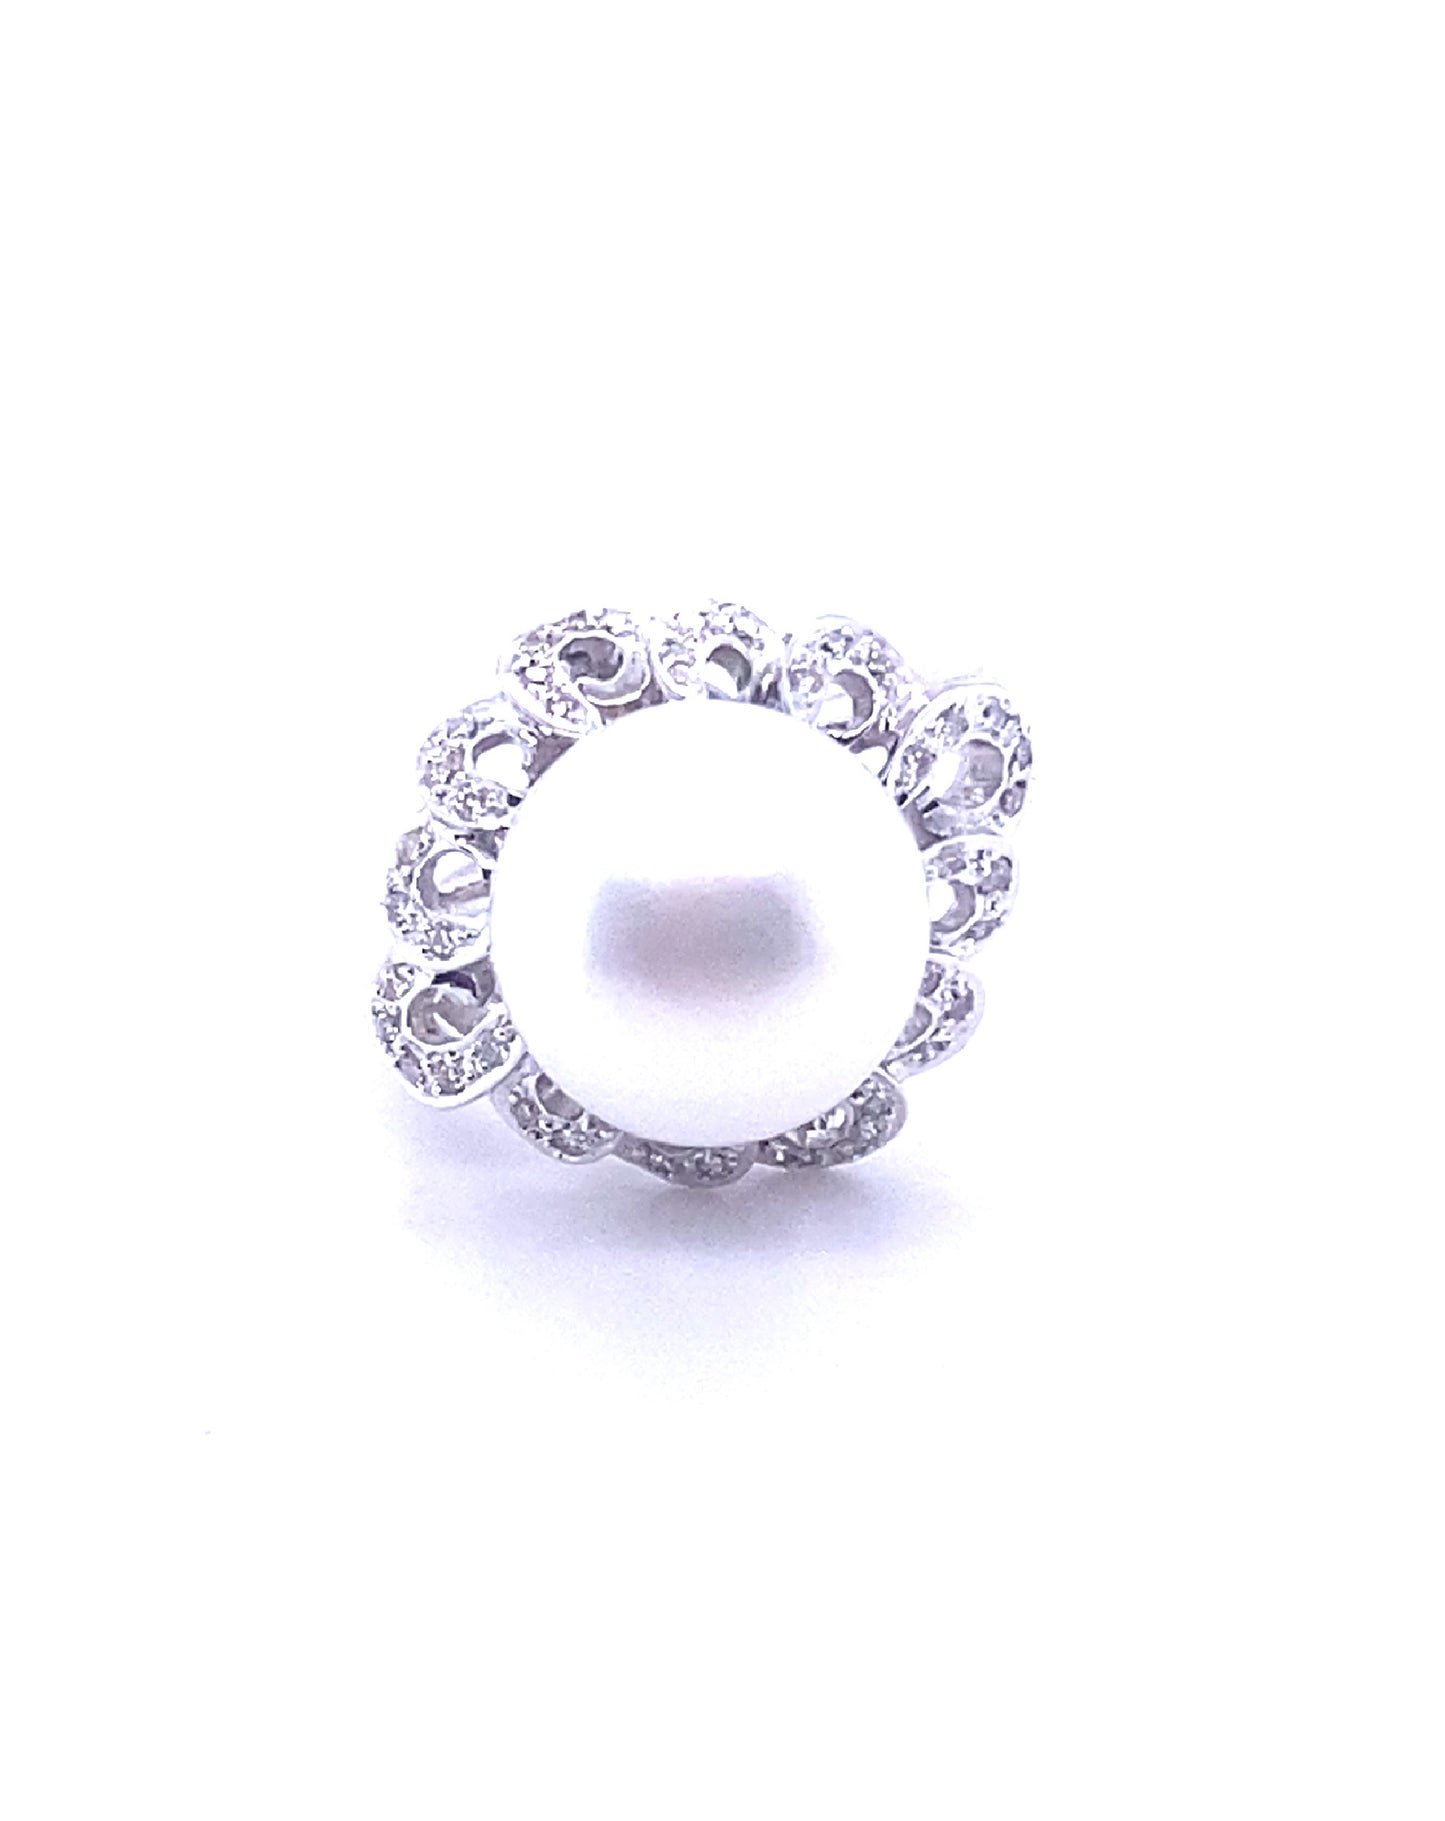 Diamonds White Pearl Semi-Precious Stone FLORAL Diamond Ring Rings